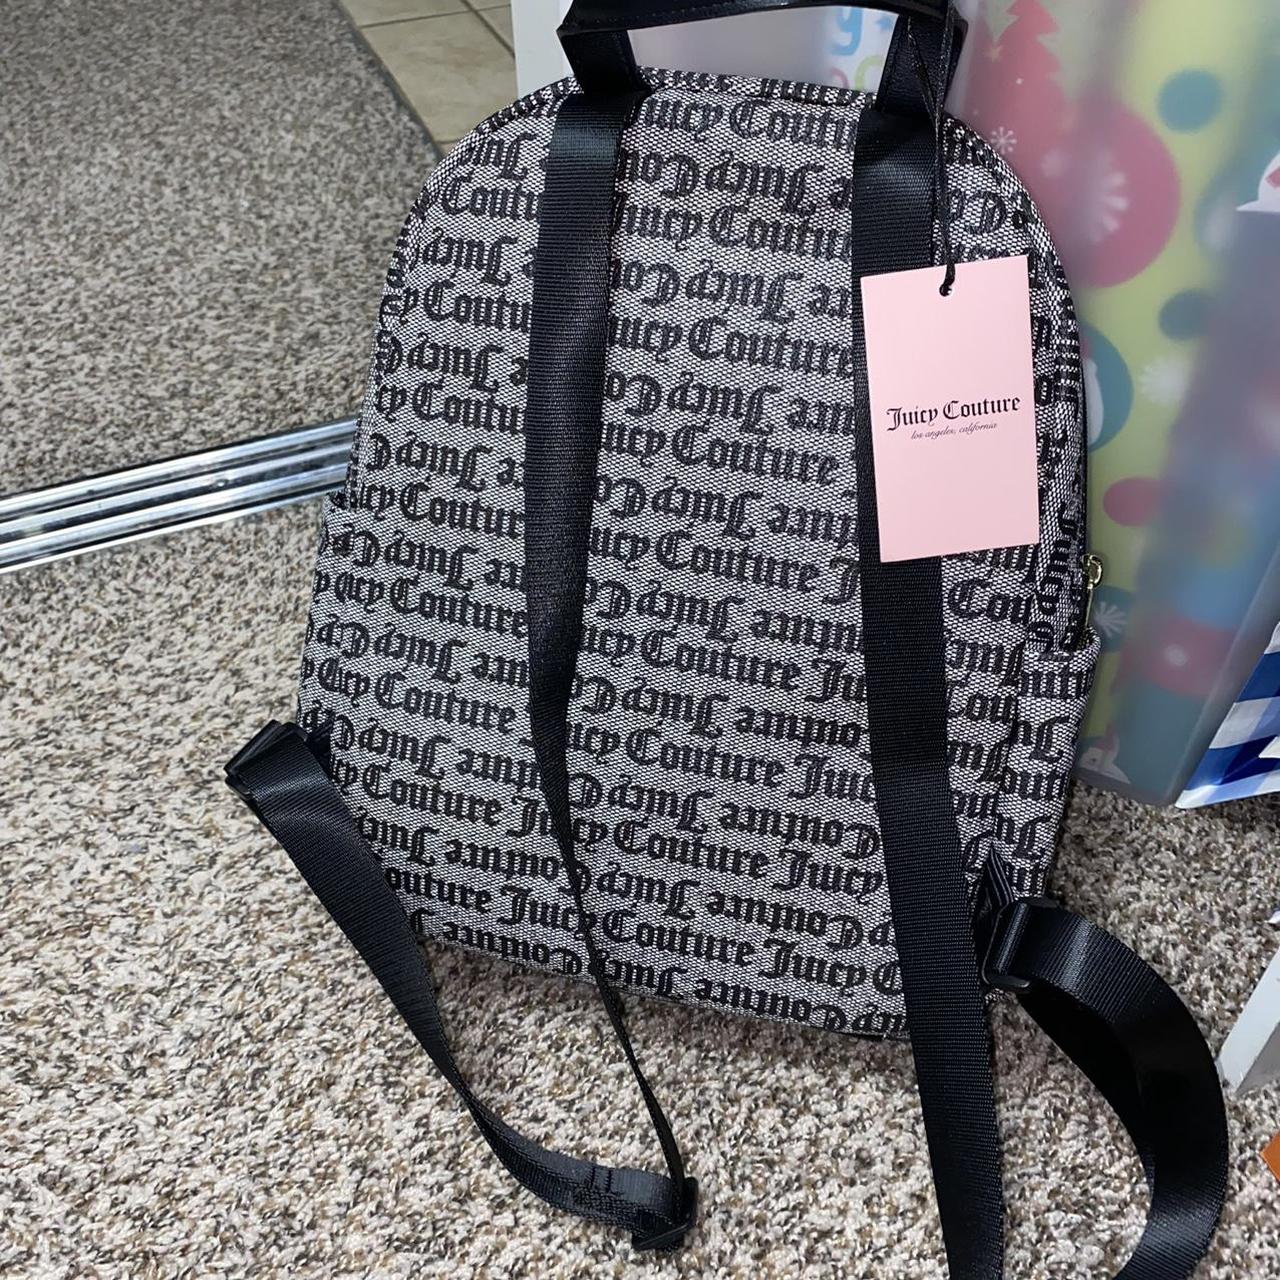 Juicy Couture Juicy Couture Black Monogram Mini Backpack